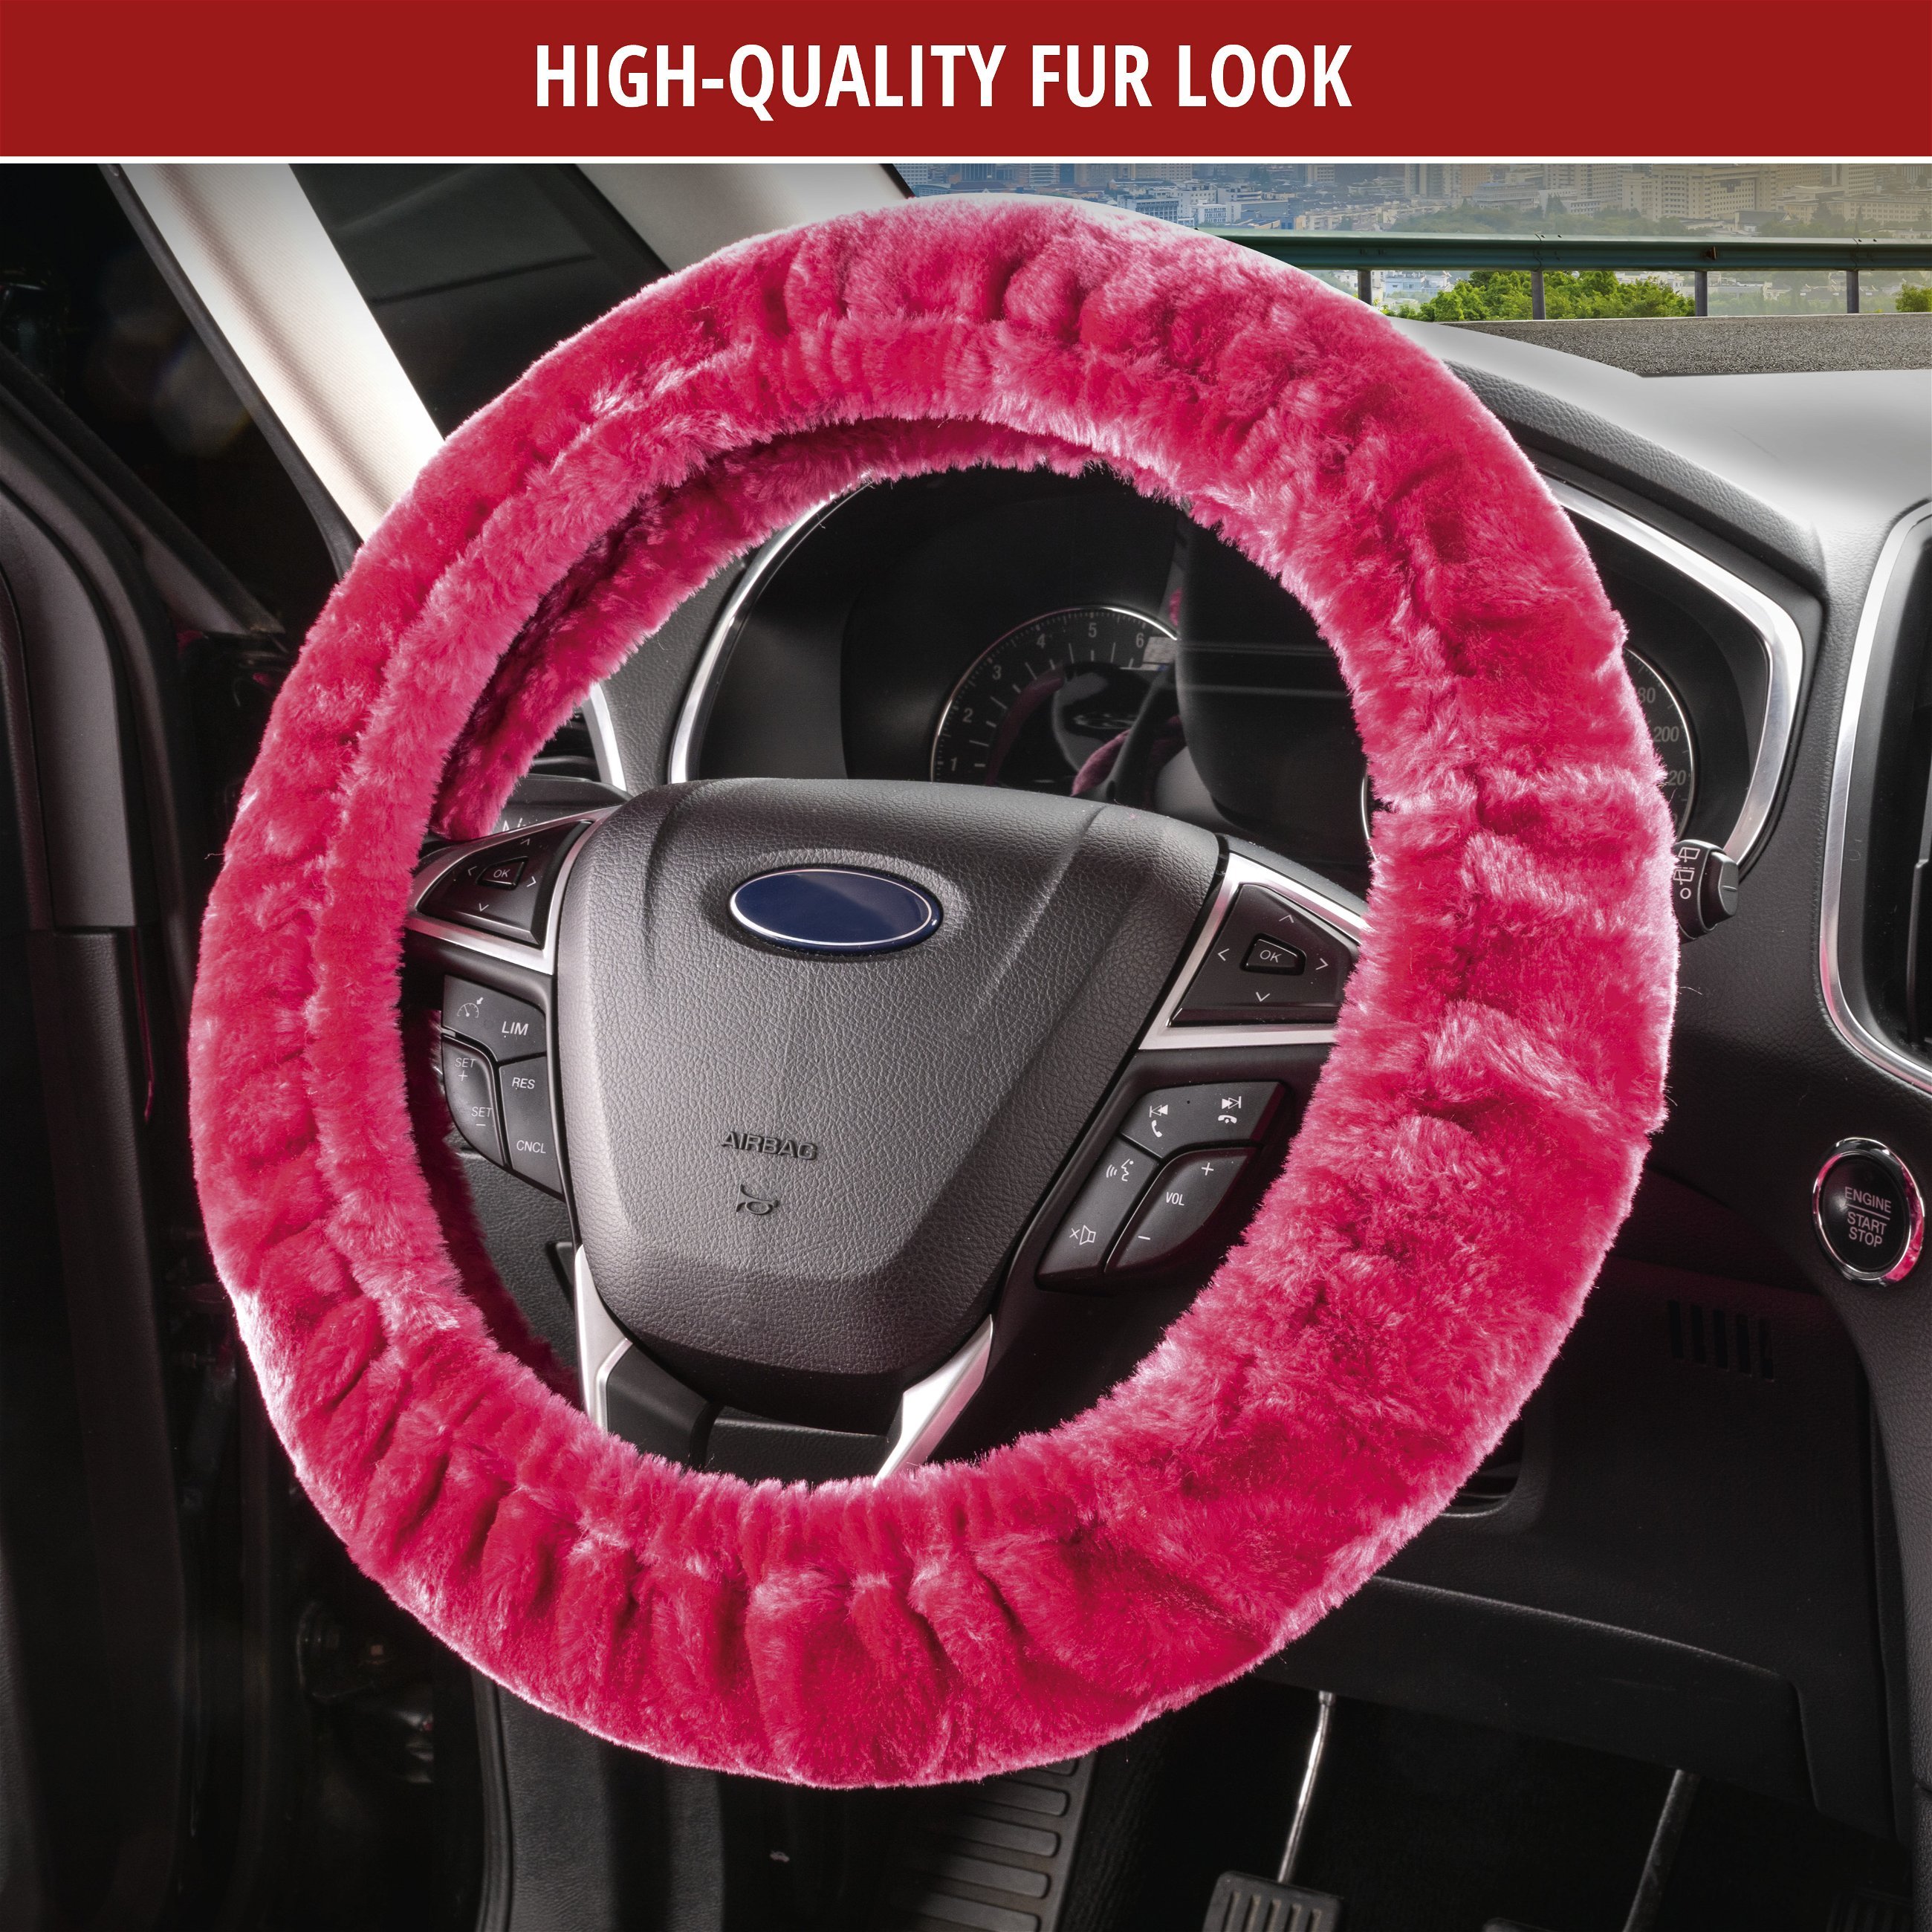 Steering wheel cover Teddy Plush faux fur vegan pink